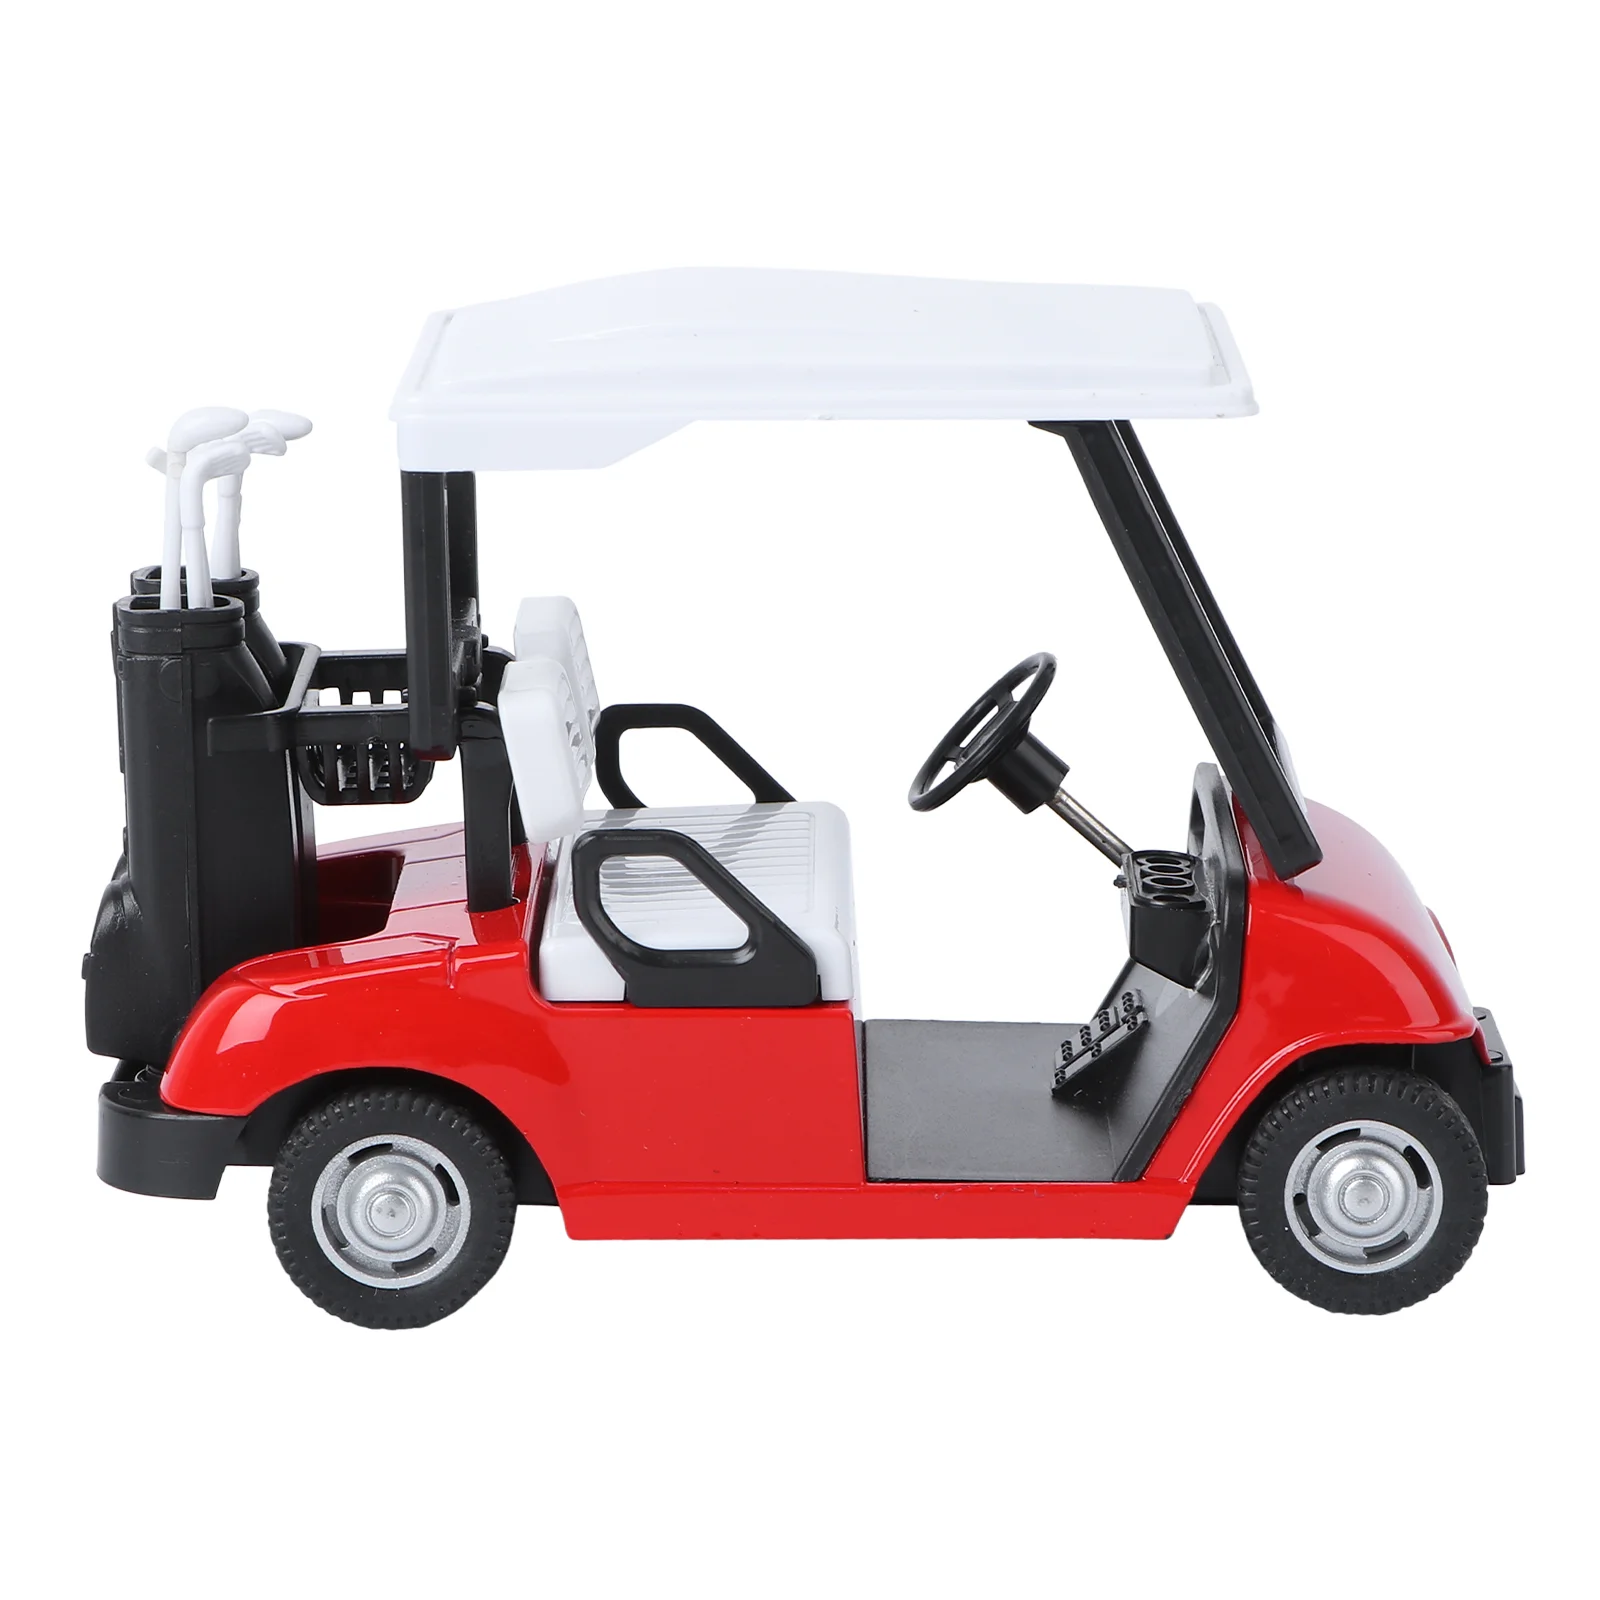 

Cart Toy Car Model Kids Vehicle Mini Diecast Metal Die Cast 20 Miniature Handle Figurine Scale Play Decorations Action Playset